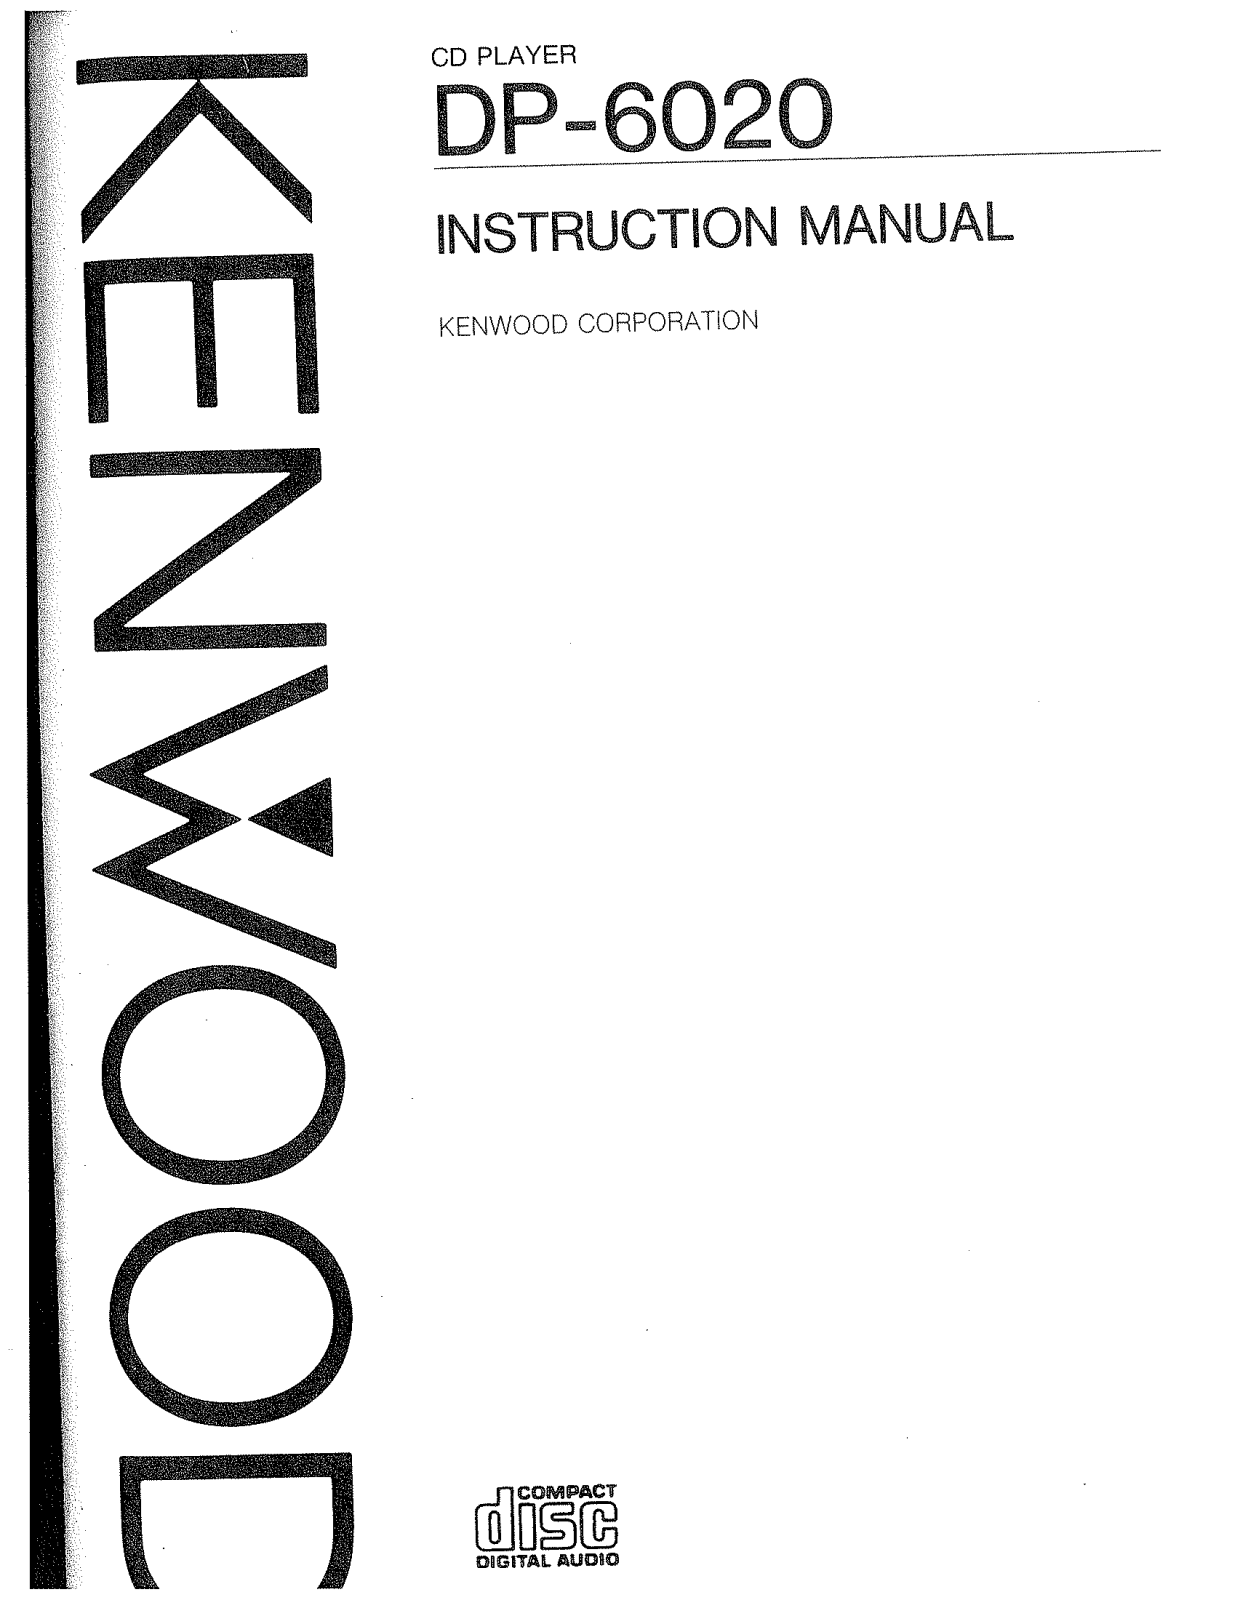 Kenwood DP-6020 Owner's Manual